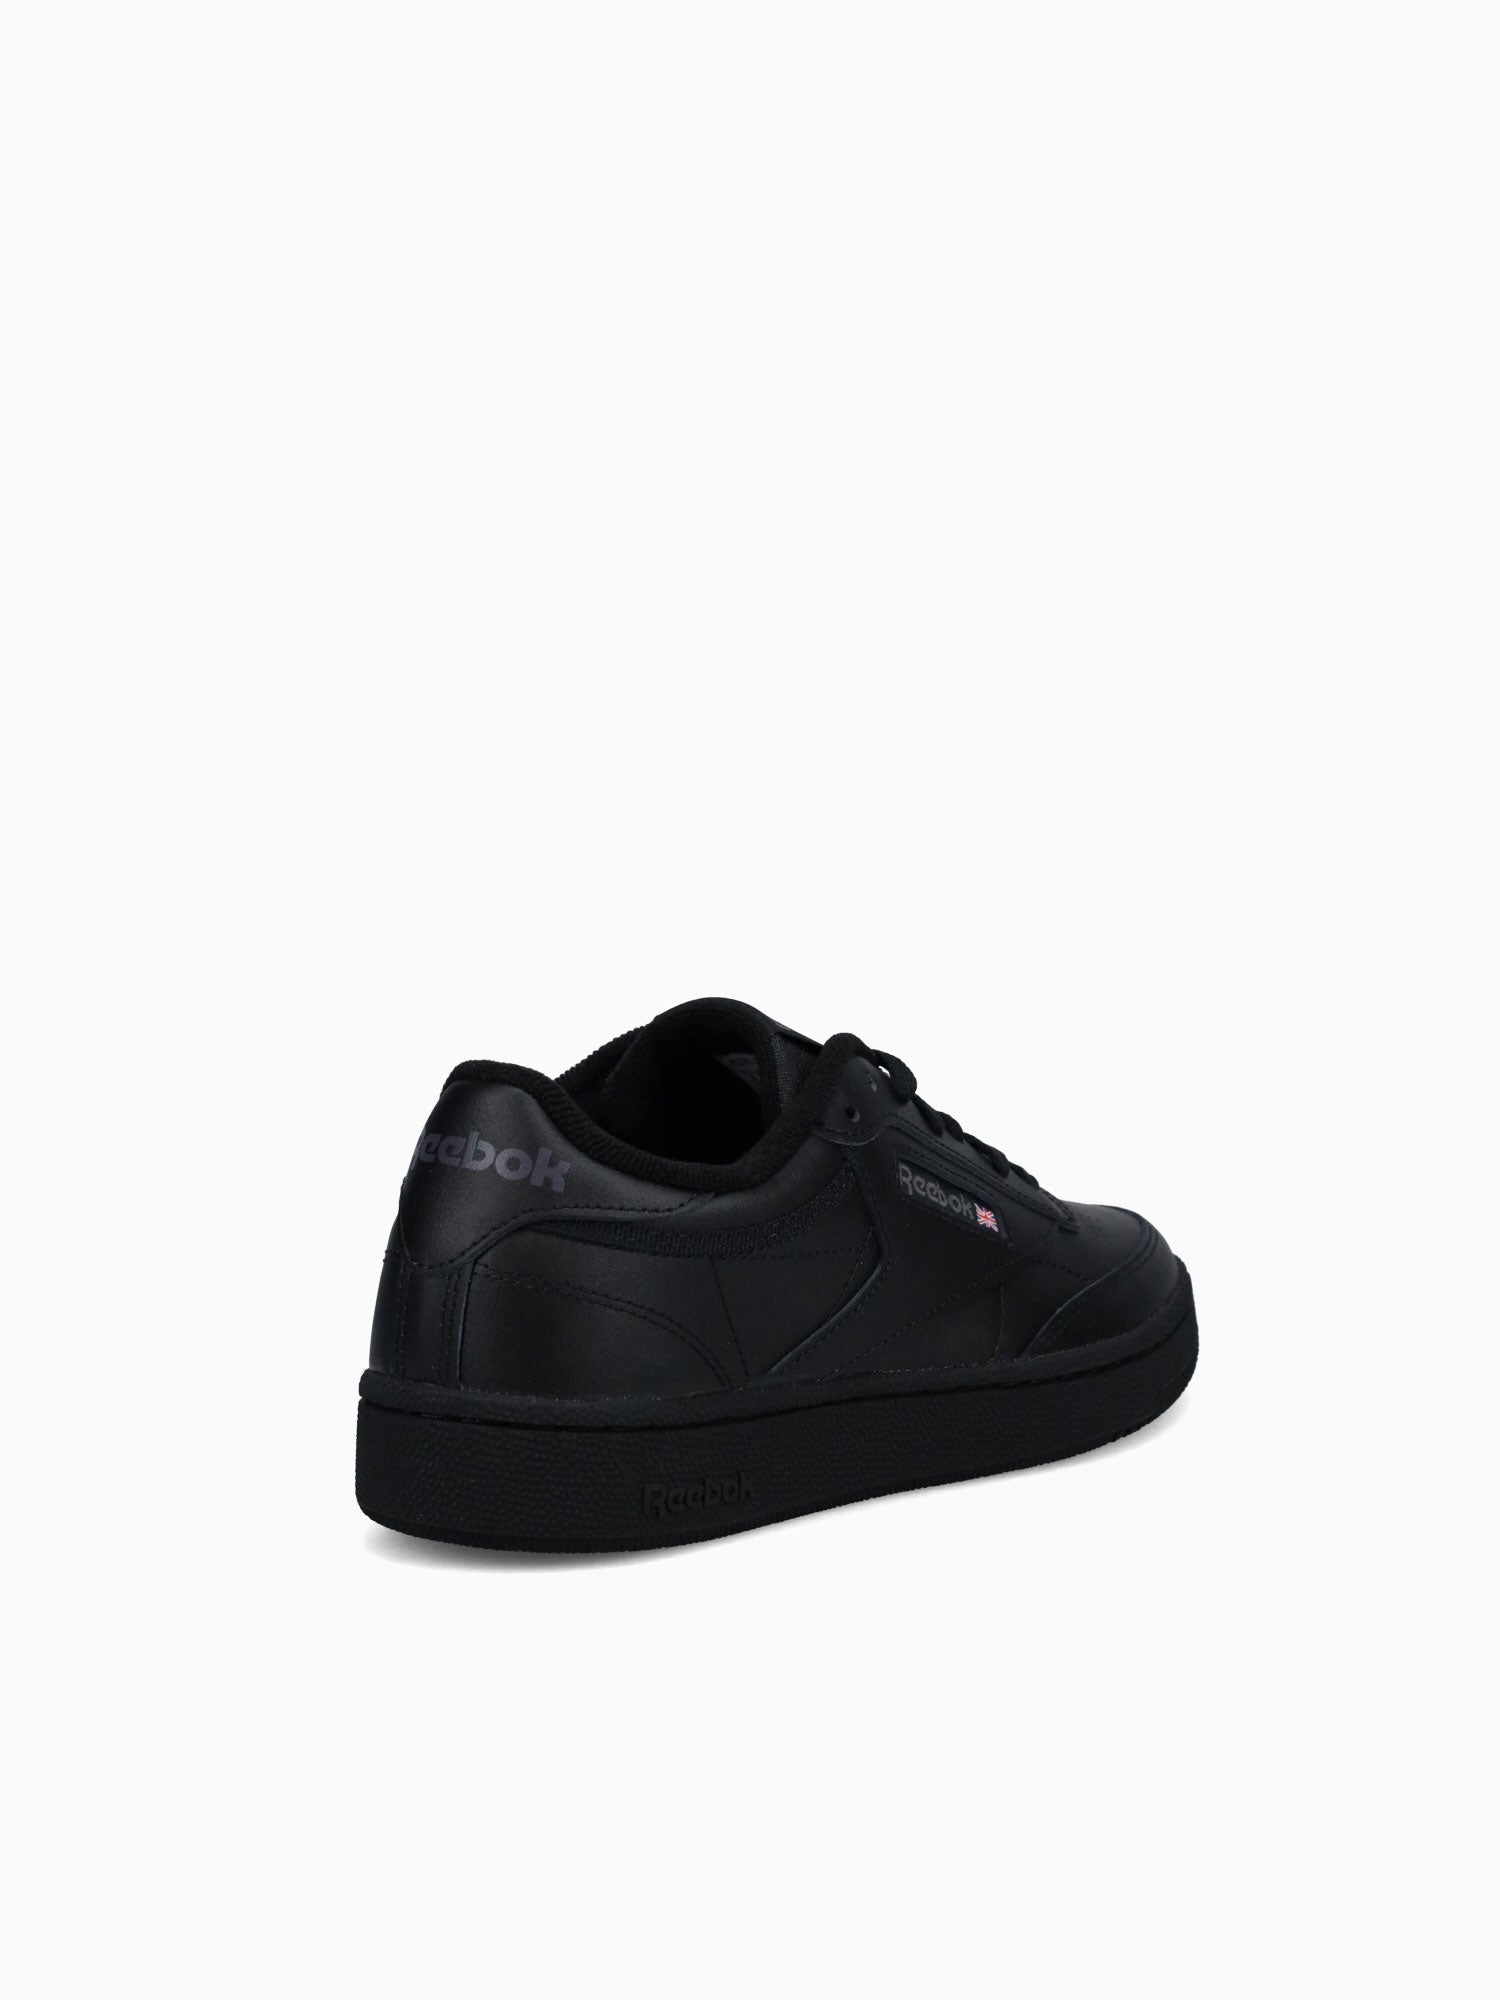 Club C 85 Black Charcoal leather– Novus Shoes